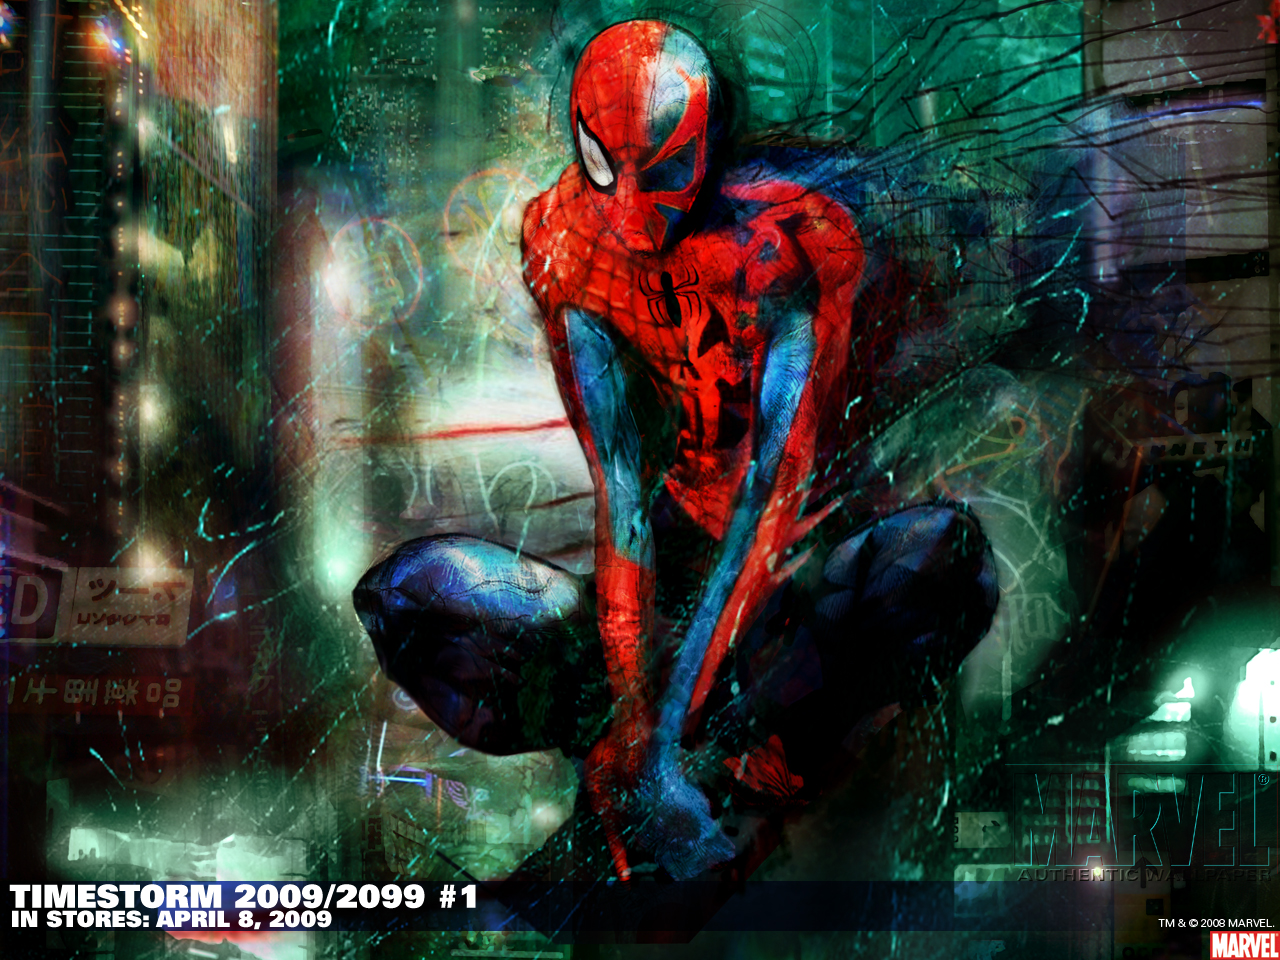 Download wallpaper for 1600x900 resolution | Spiderman HD | anime |  Wallpaper Better